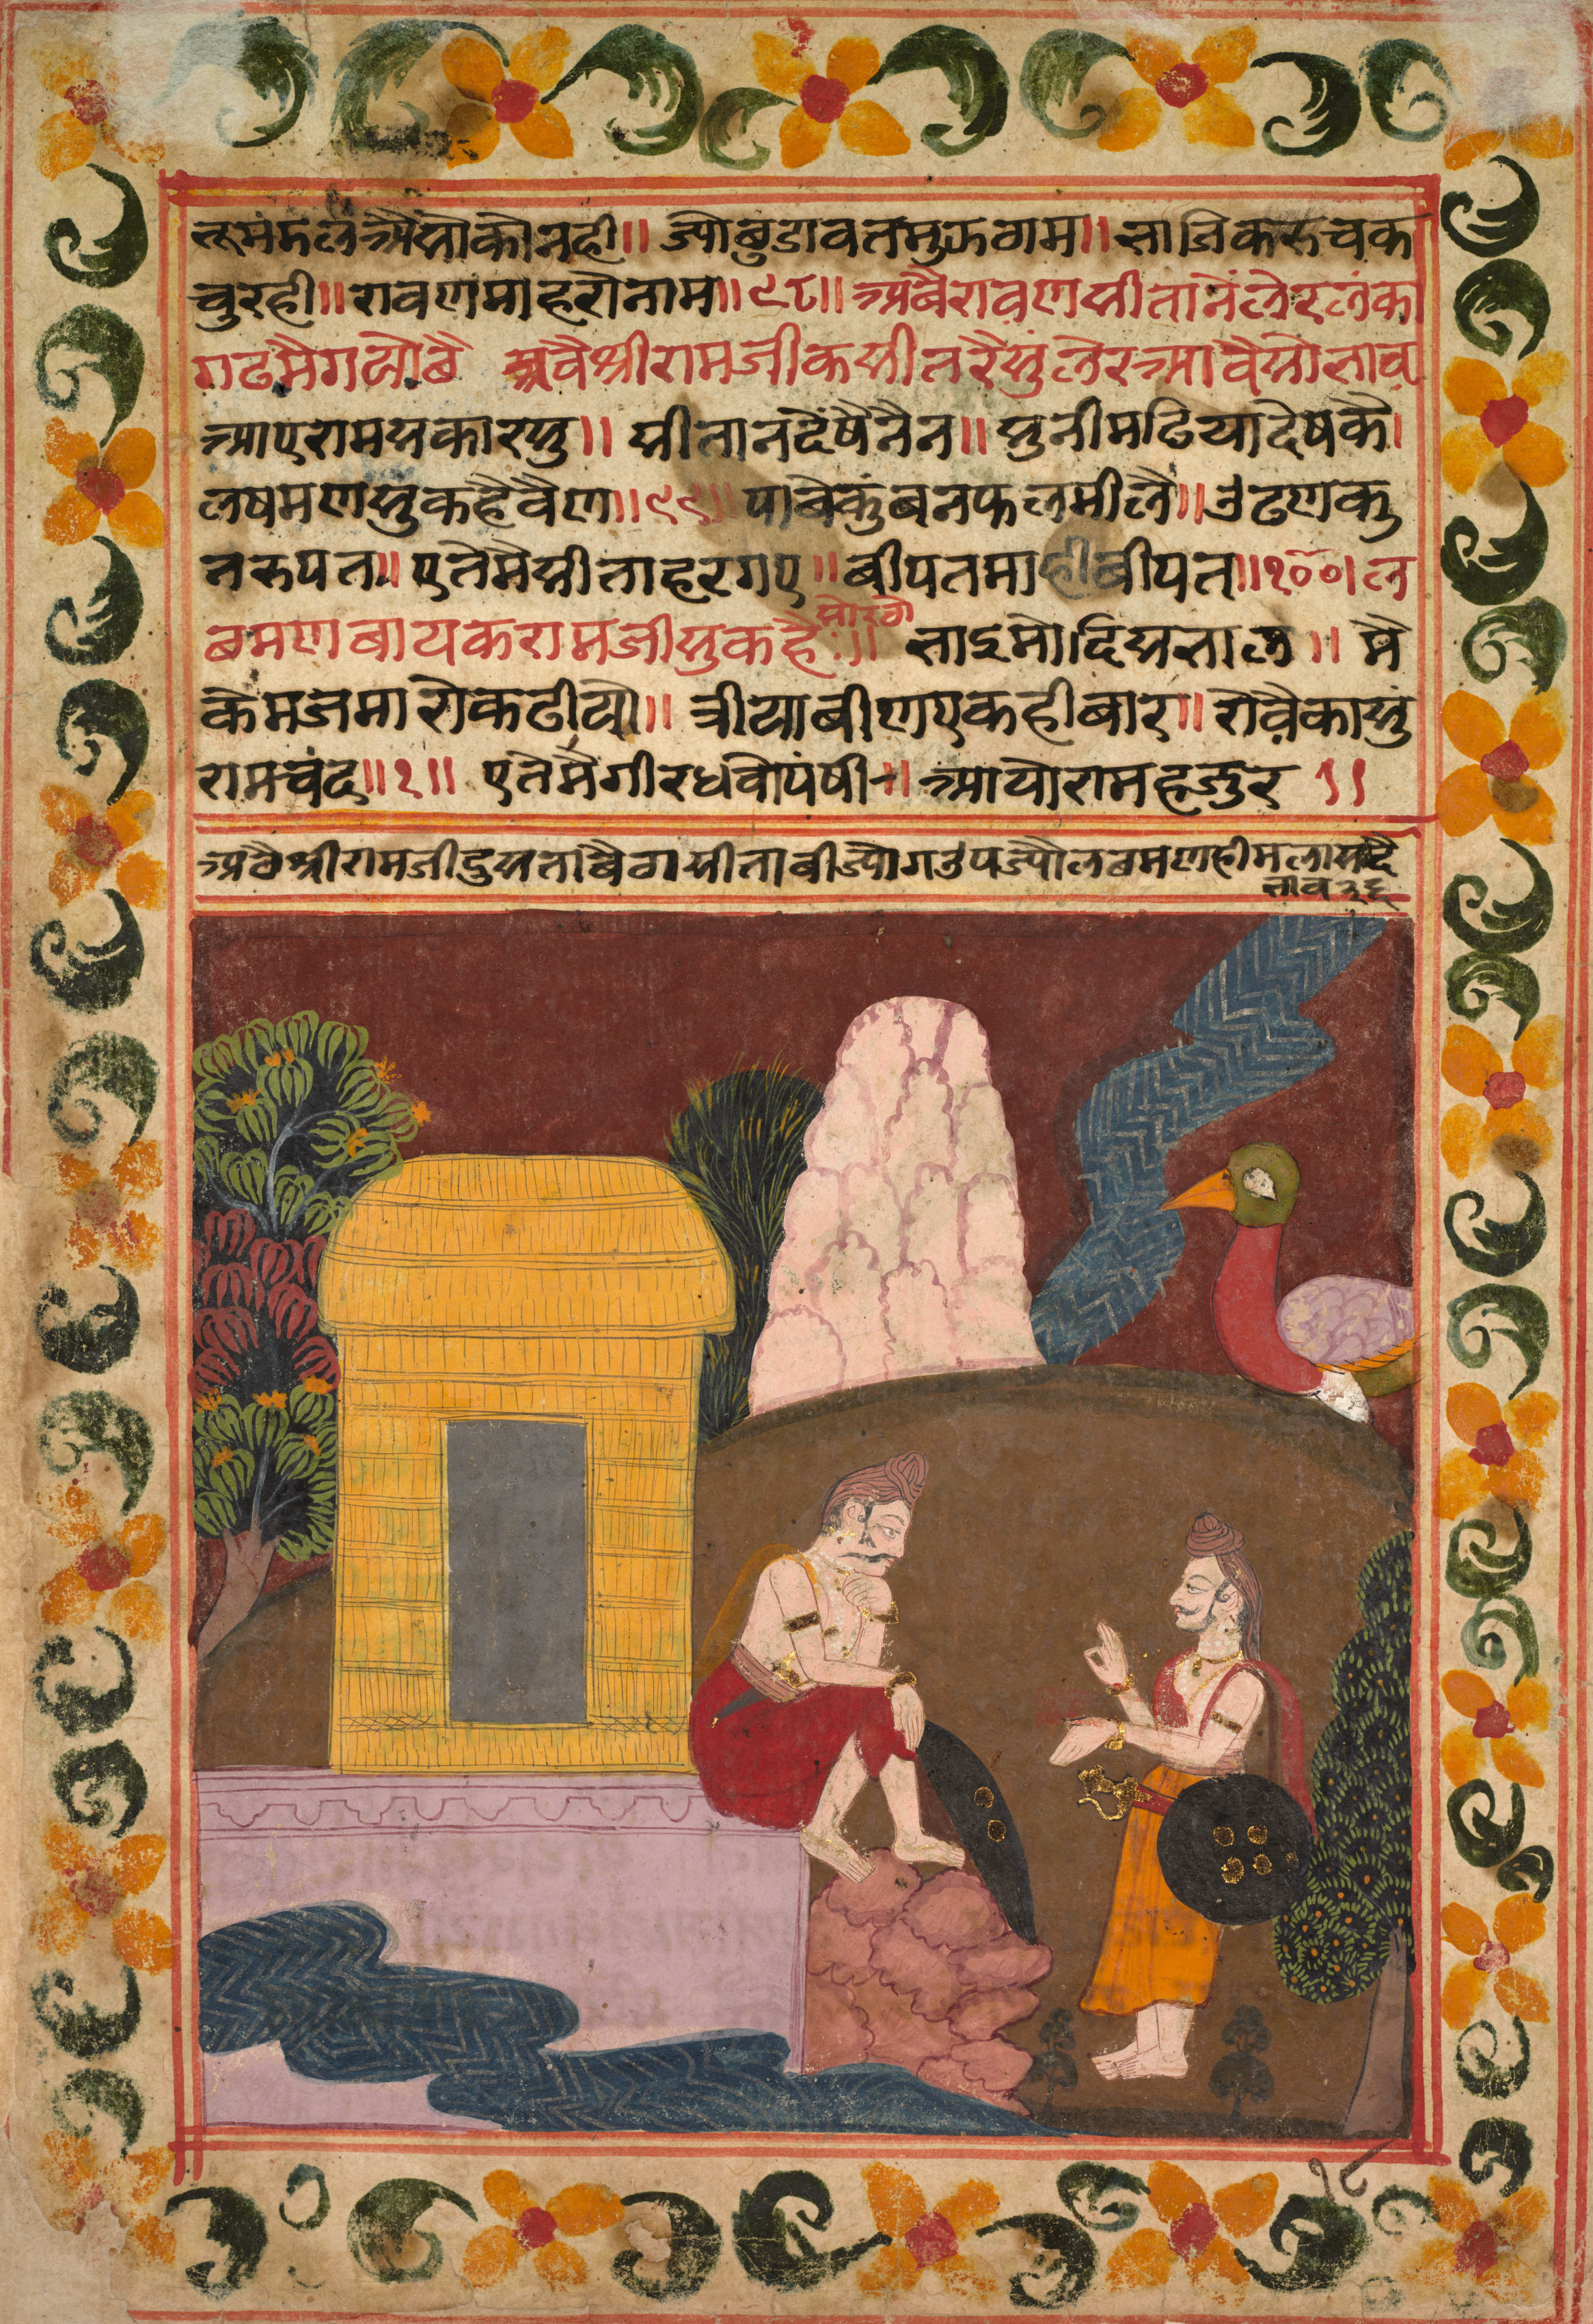 Jatayu approaches Rama and Lakshmana who are wondering where Sita could be, folio 18 (verso) from a Chandana Malayagiri Varta (Story of King Chandana and Queen Malayagiri) of Karamachand